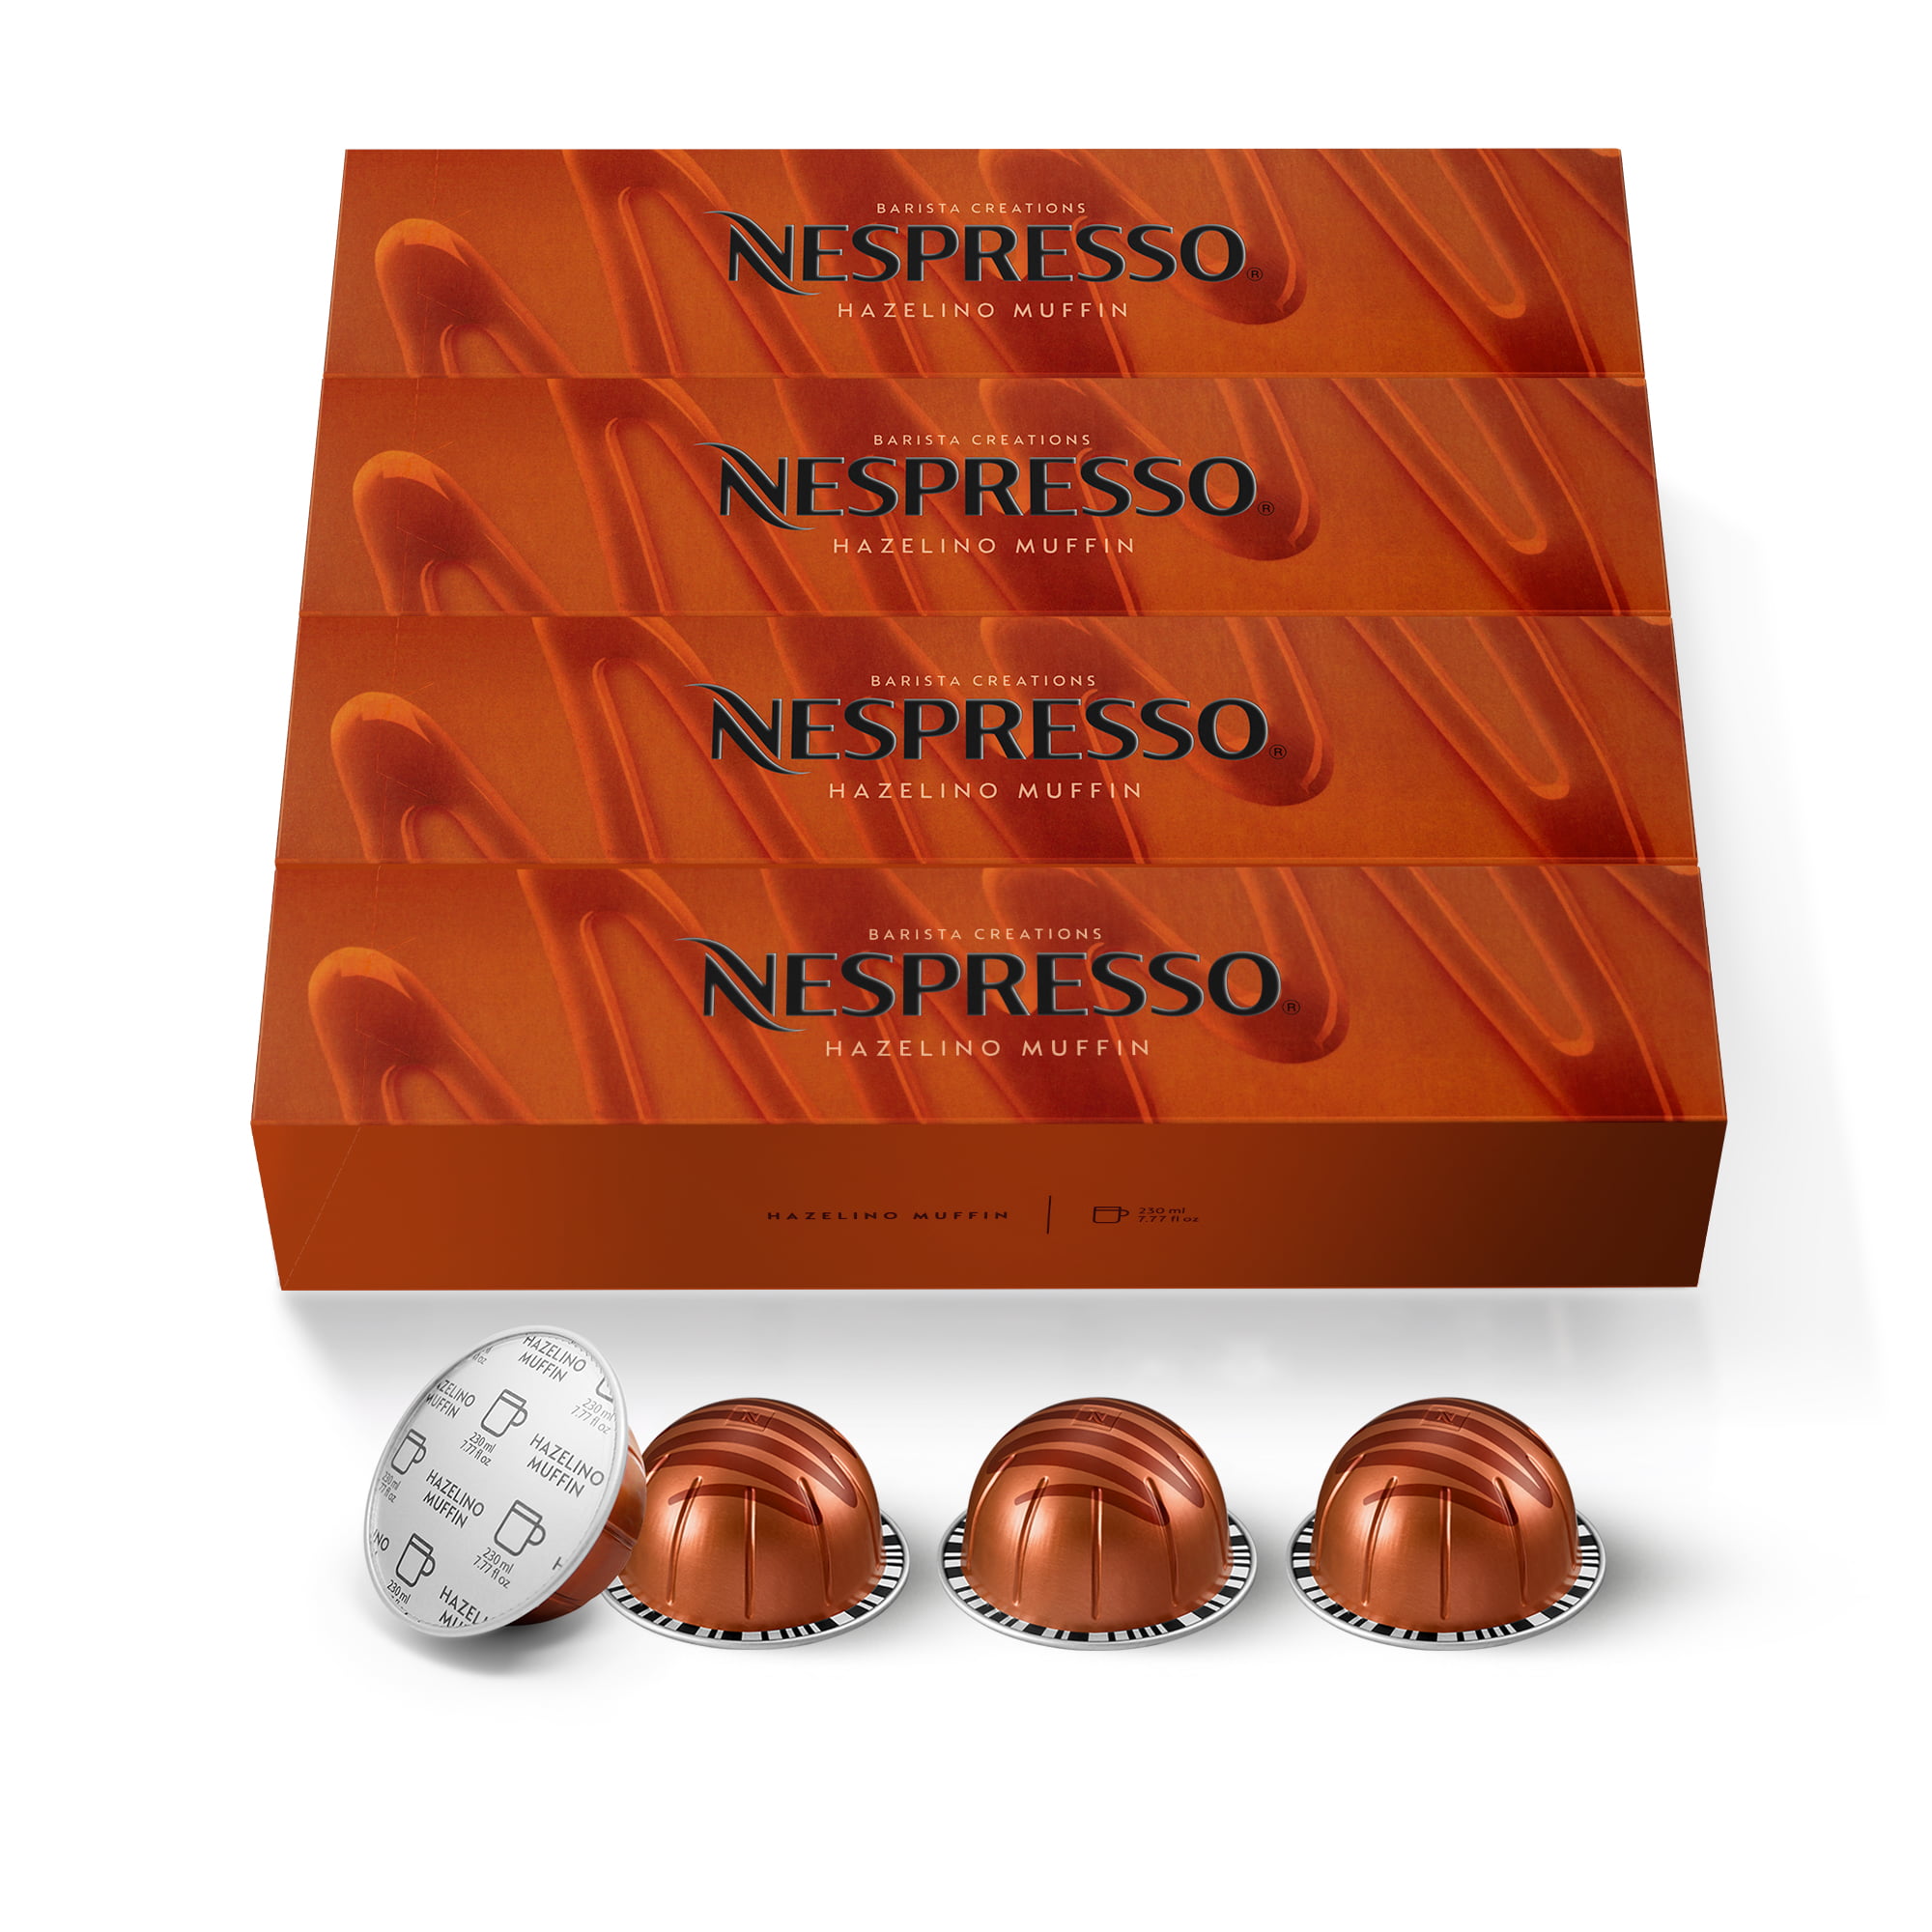 Nespresso Hazelino Muffin Medium Roast, Coffee Pods, 40 Ct (4 Boxes of 10)